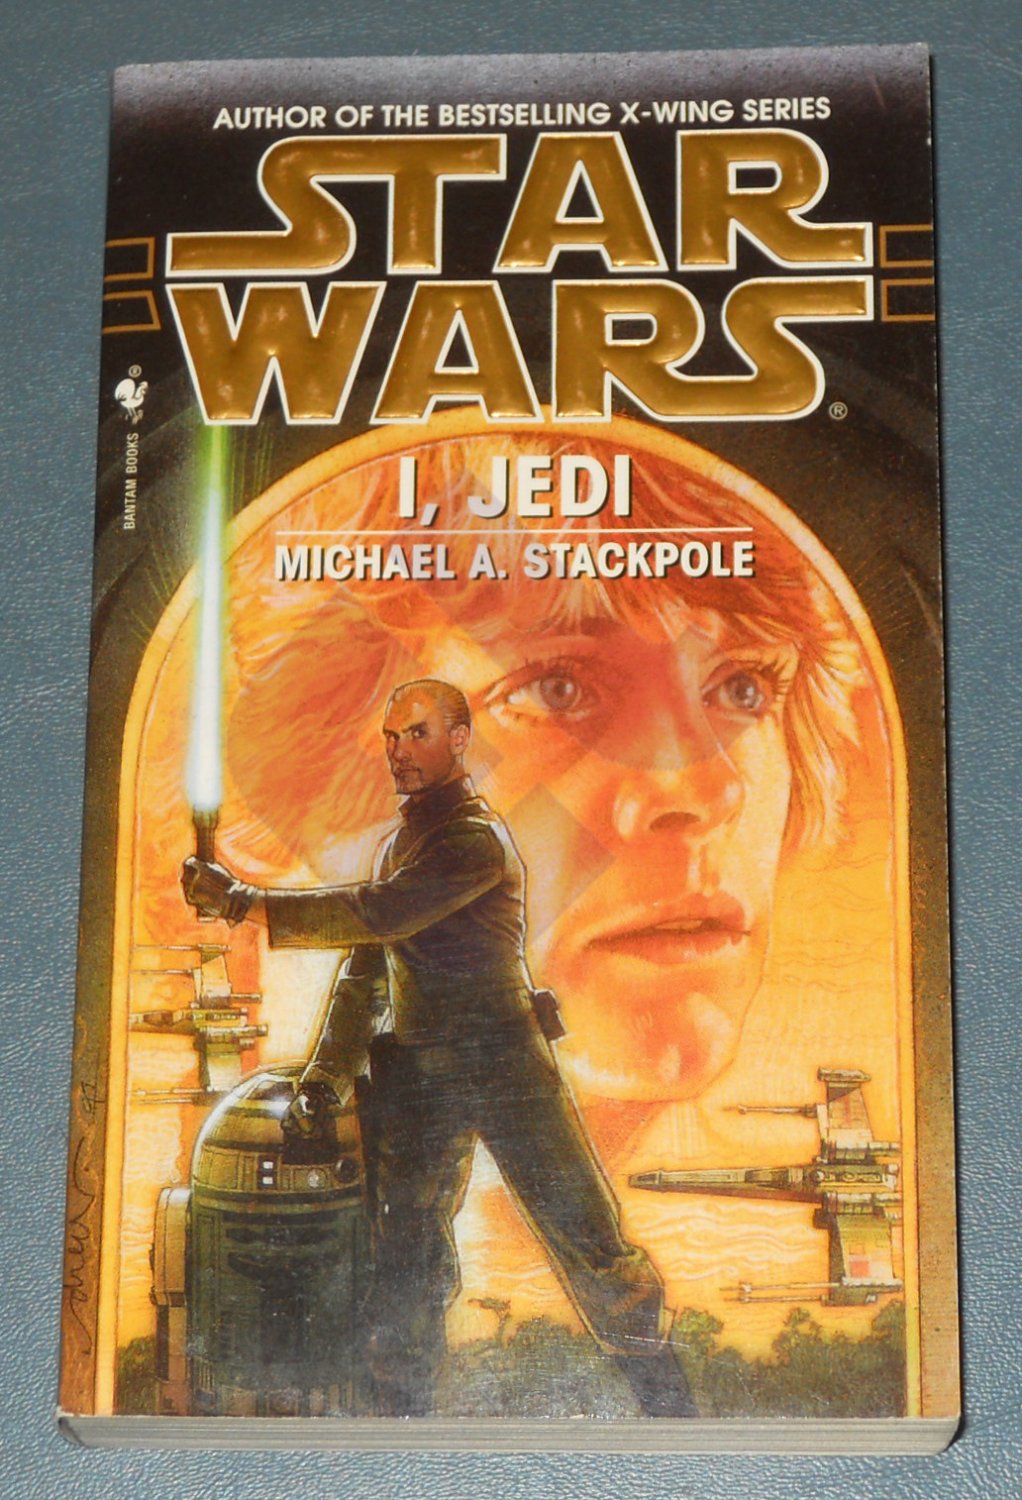 Star wars legends. Jedi's books. Звёздные войны 1 аудиокнига.